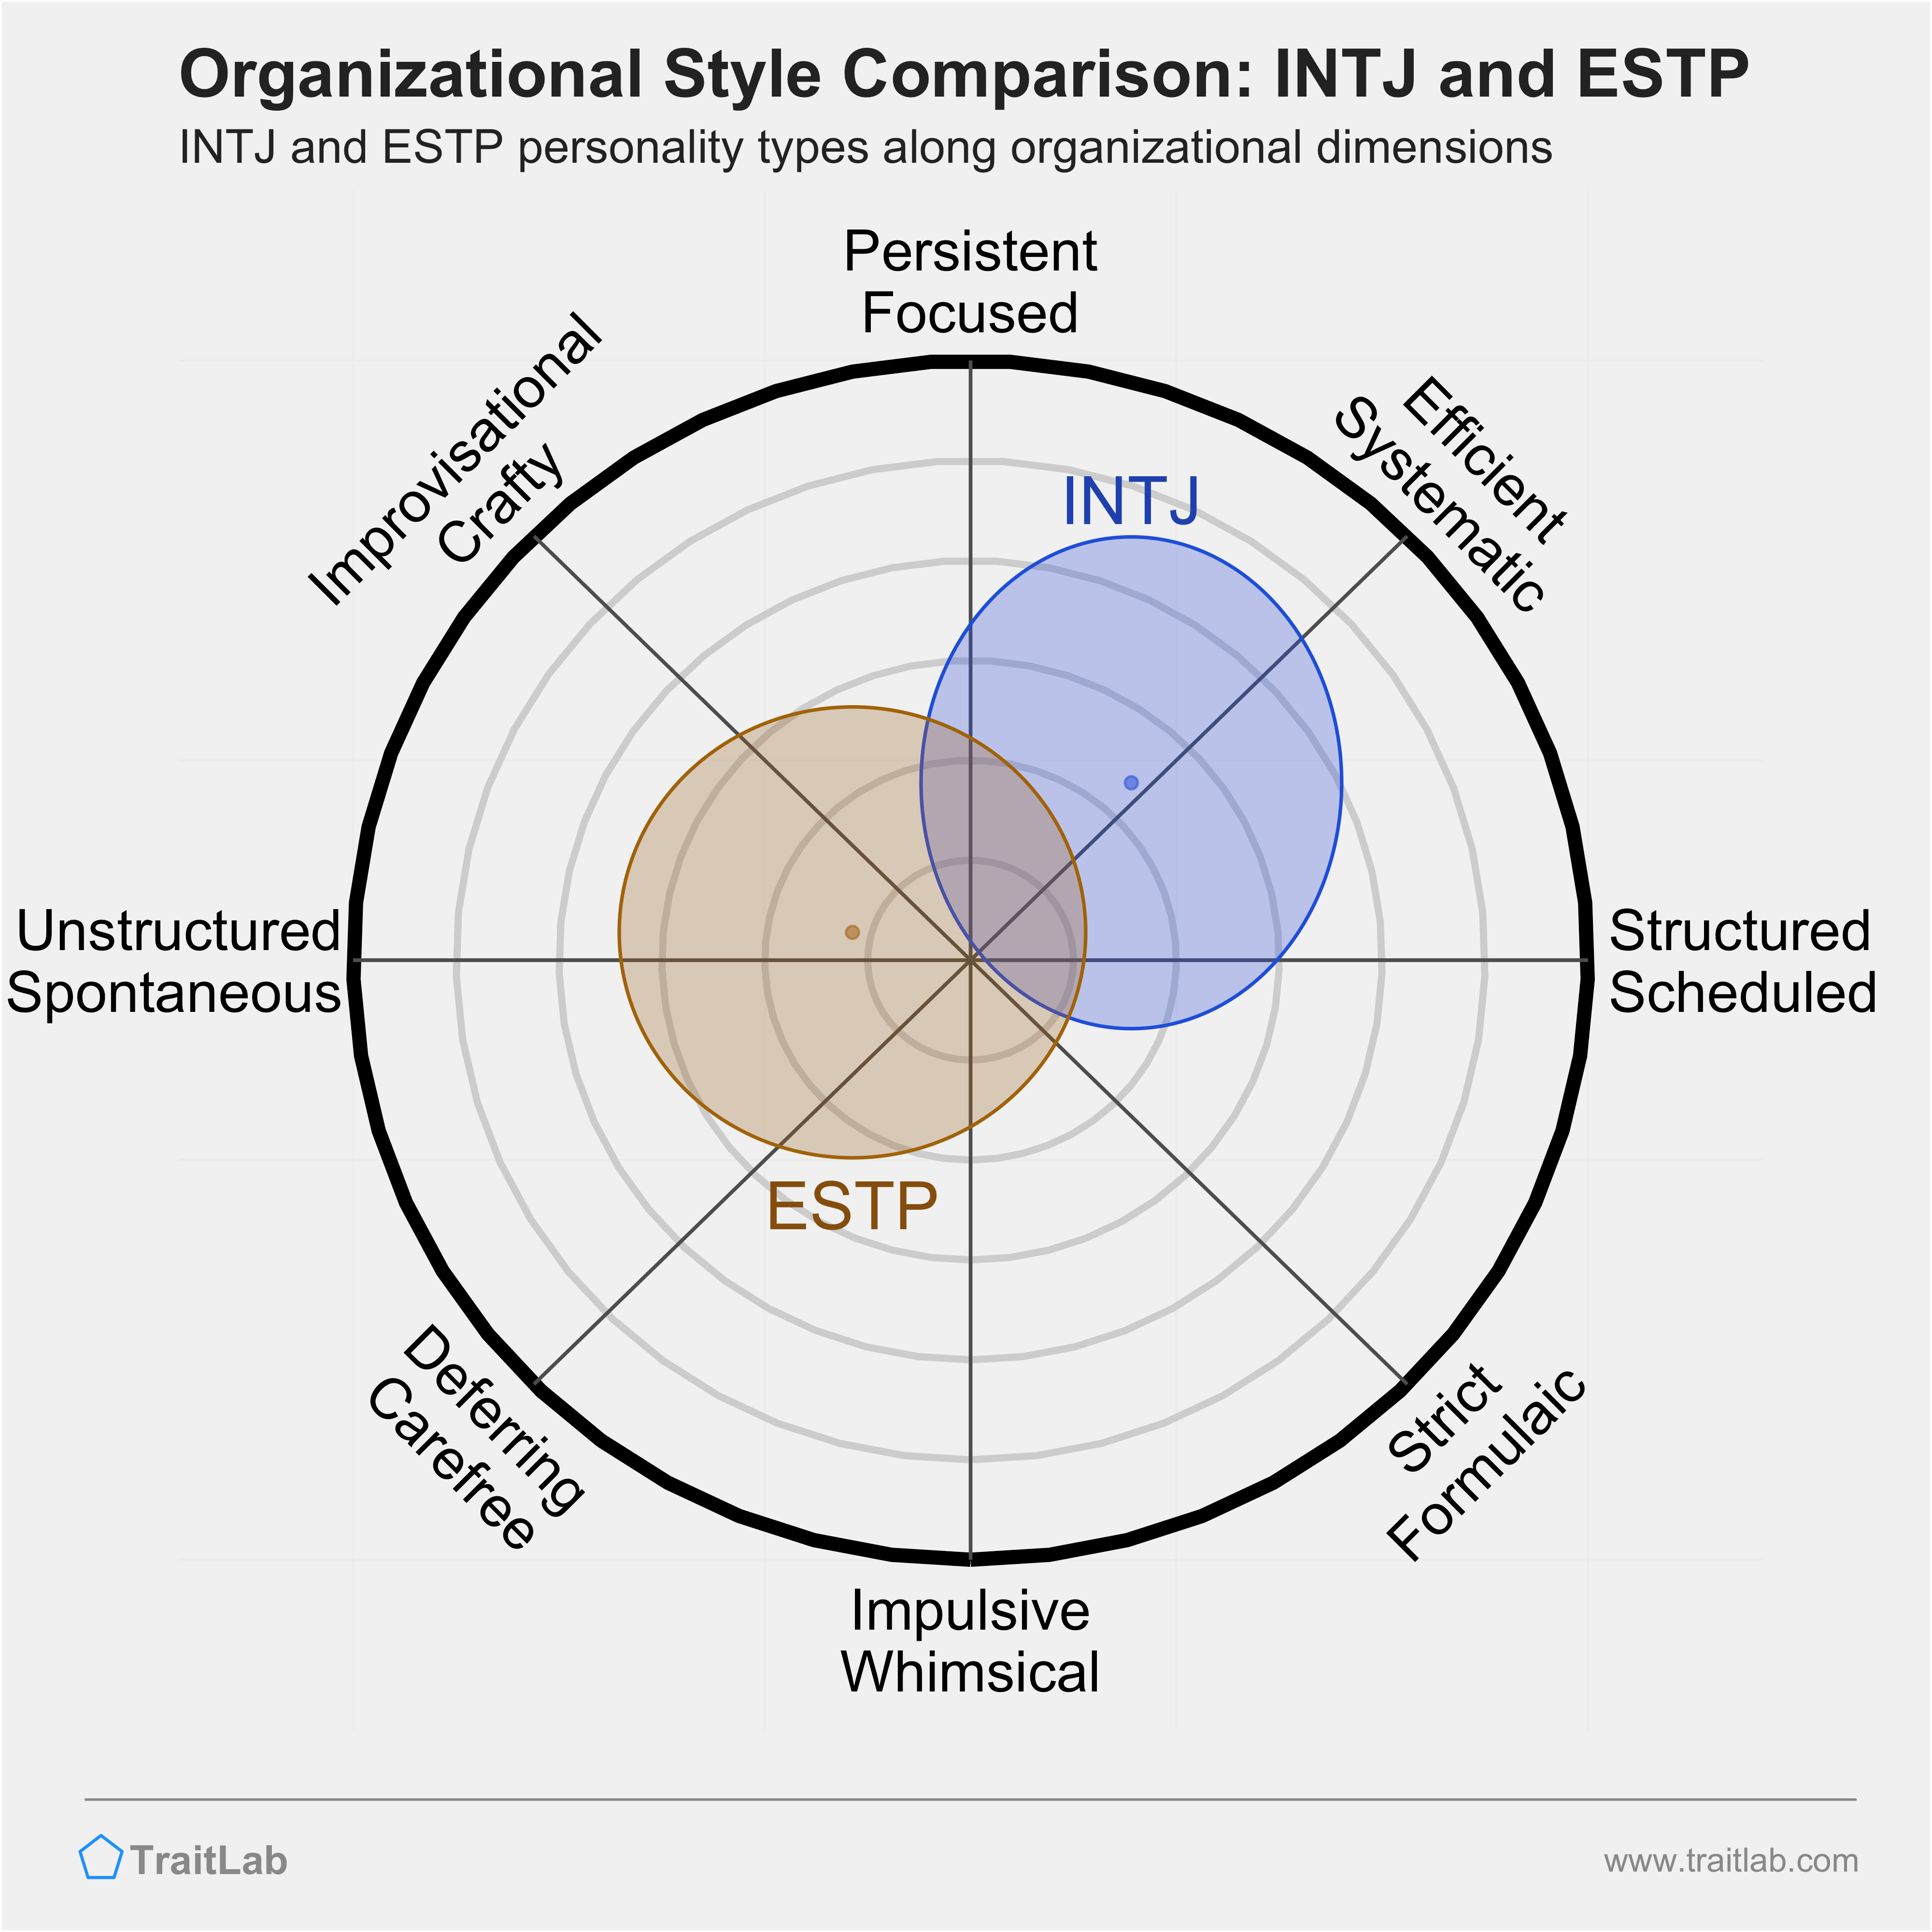 INTJ and ESTP comparison across organizational dimensions